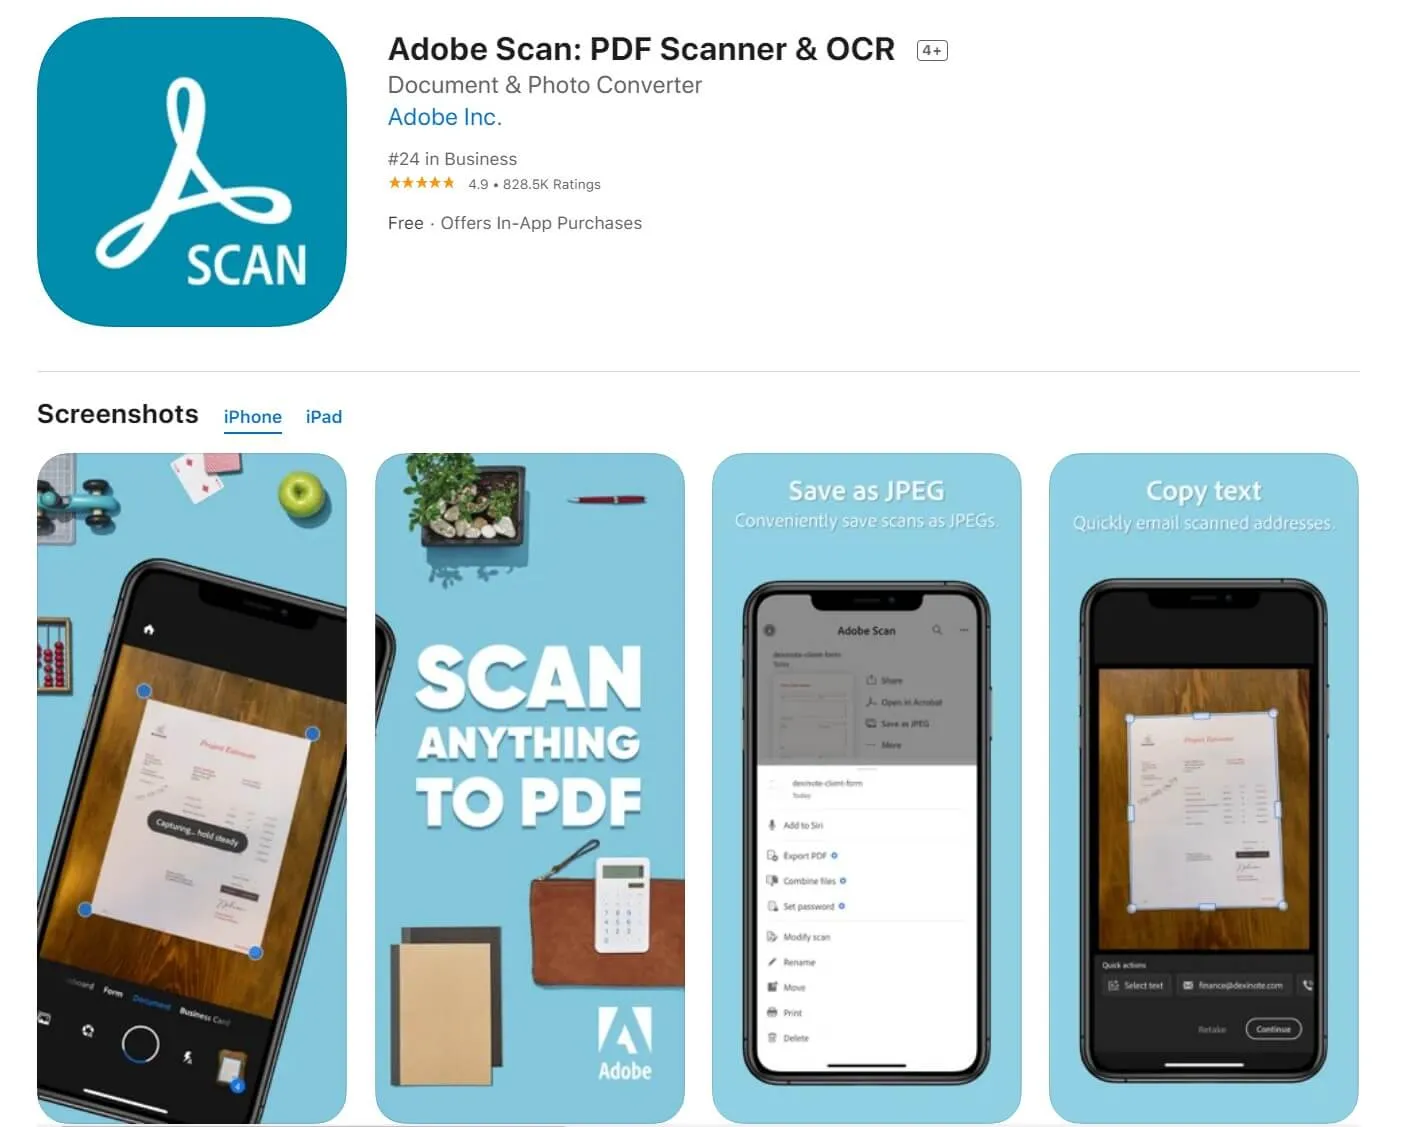 Adobe scan:PDF scanner & OCR 스캔 프로그램